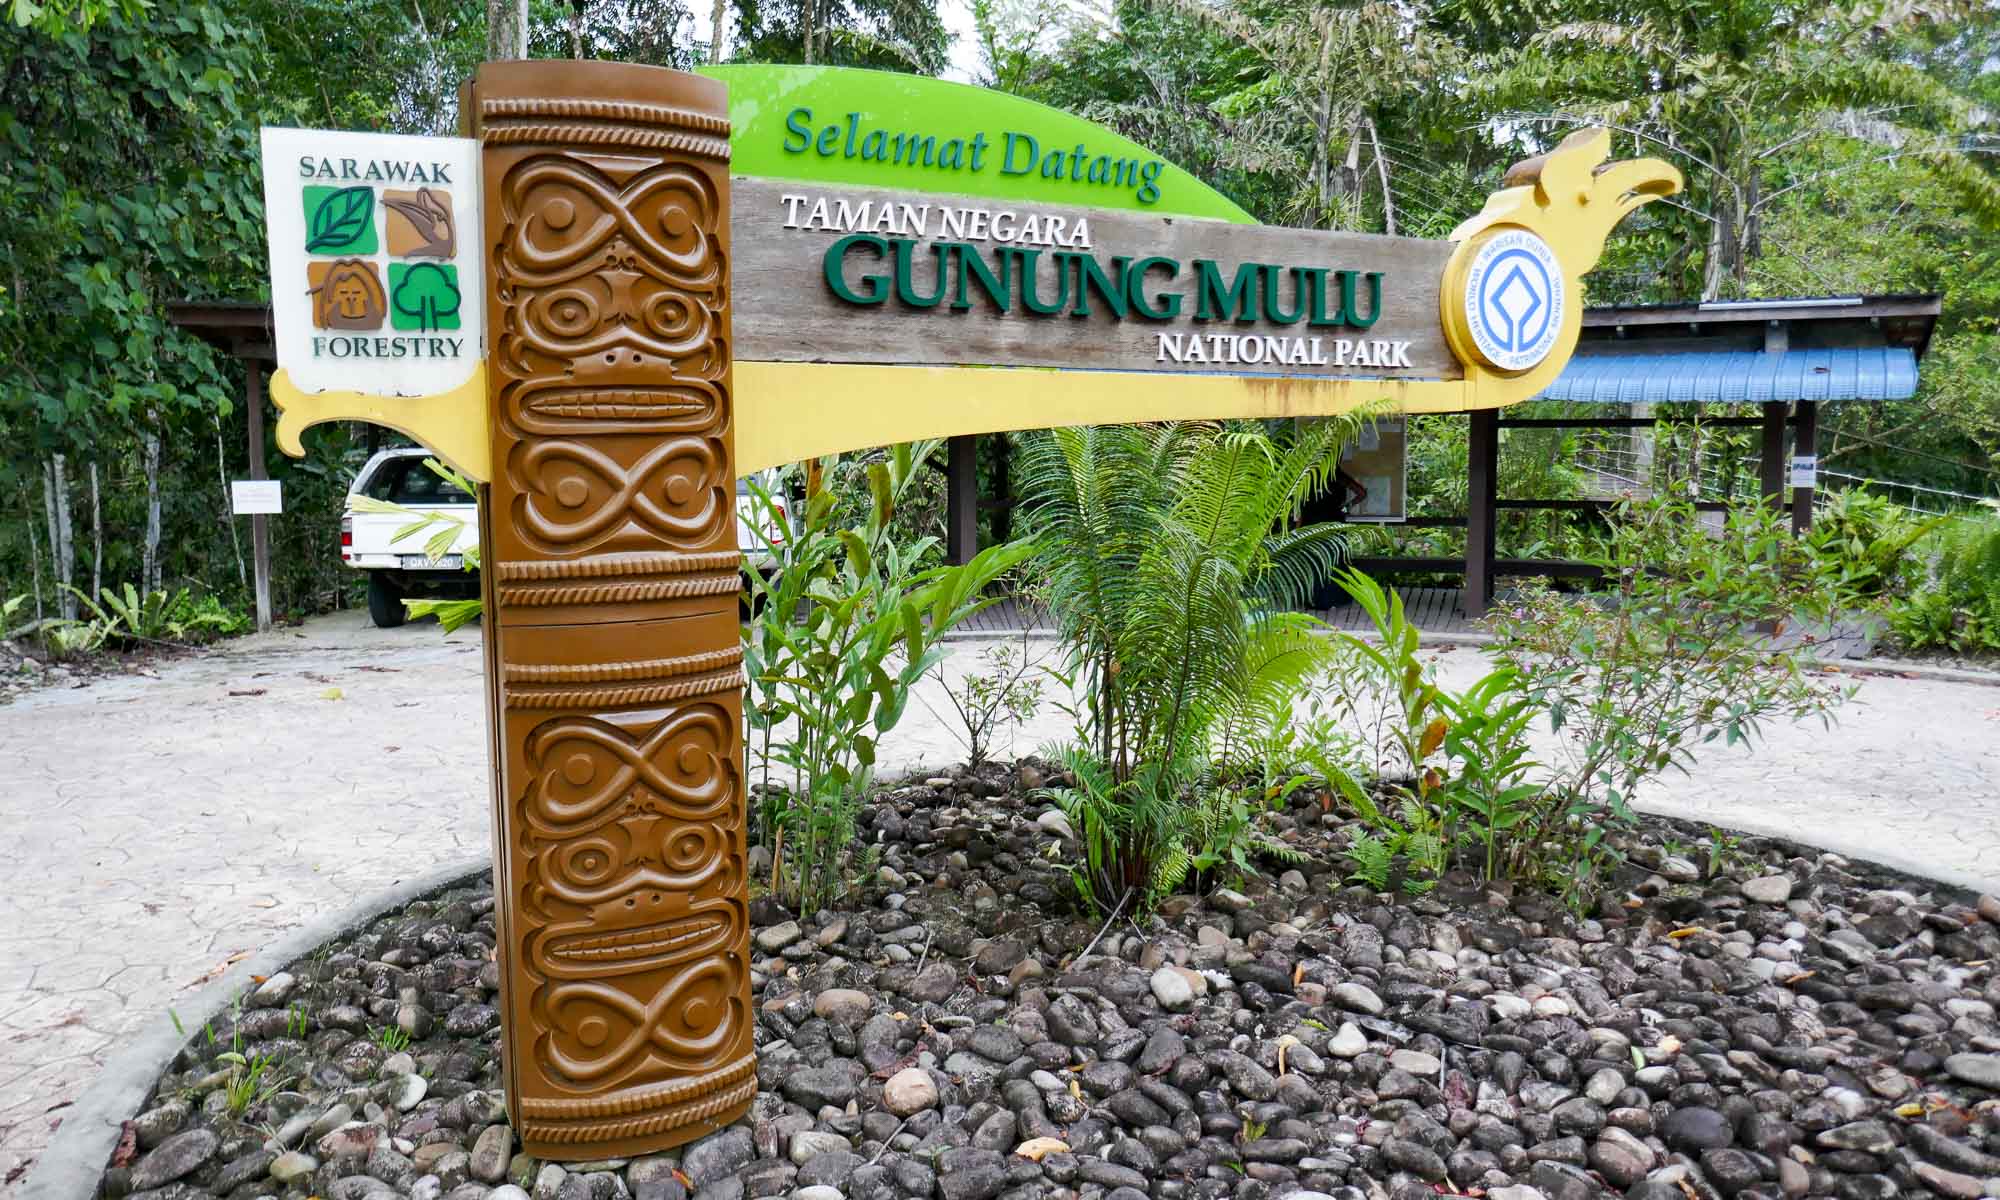 Entrance to Gunung Mulu National Park